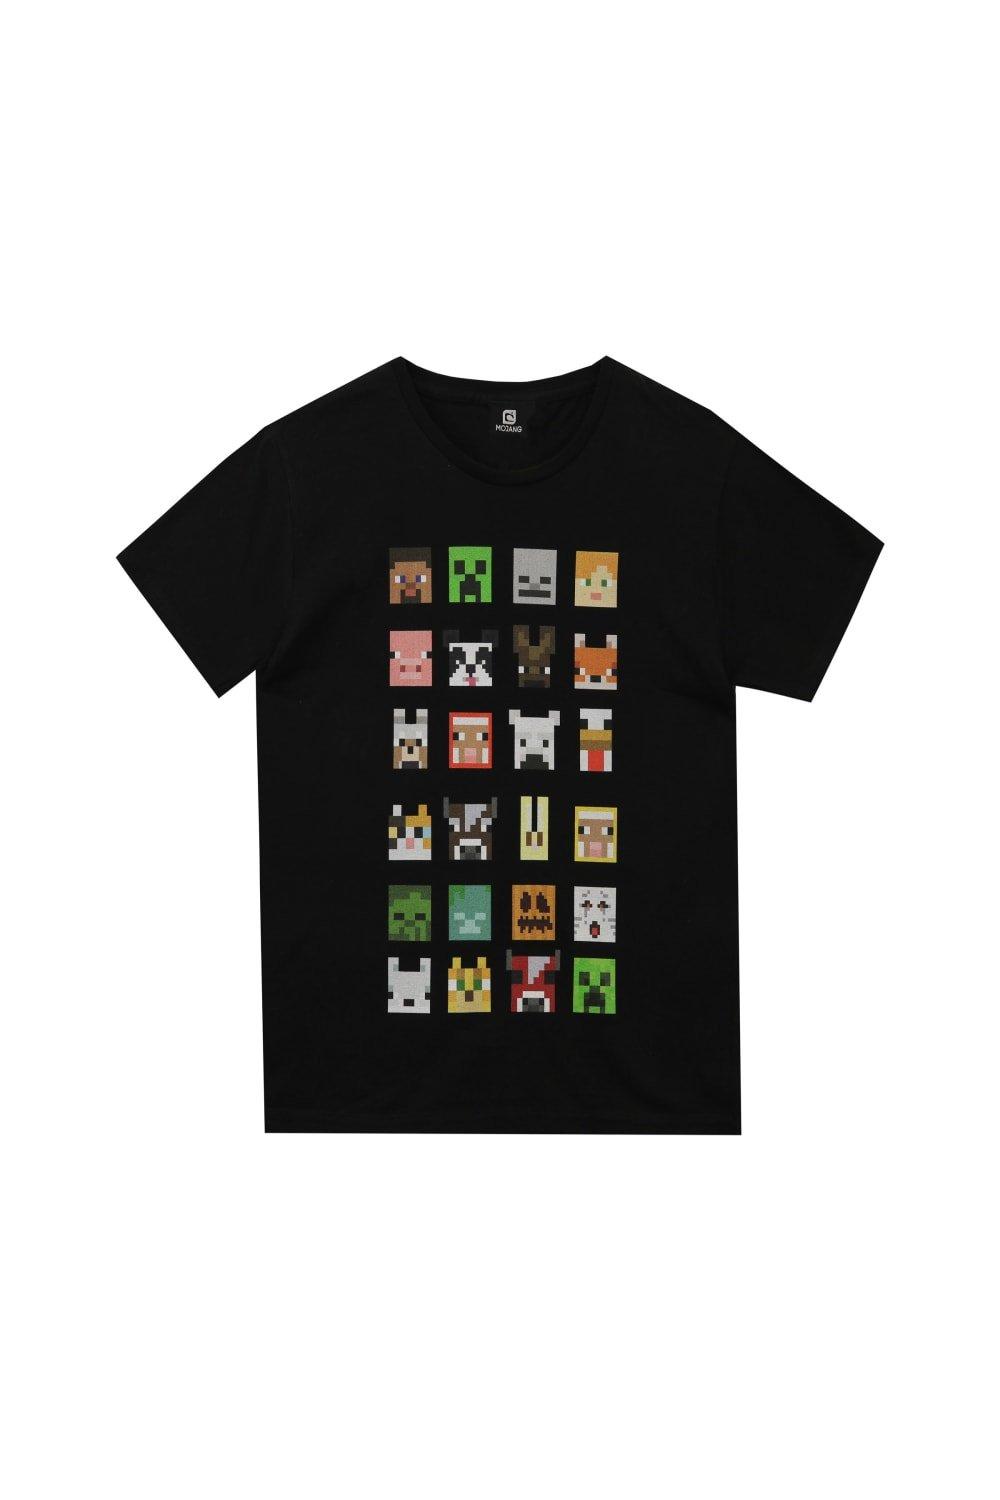 Steve Creeper And Friends T-Shirt